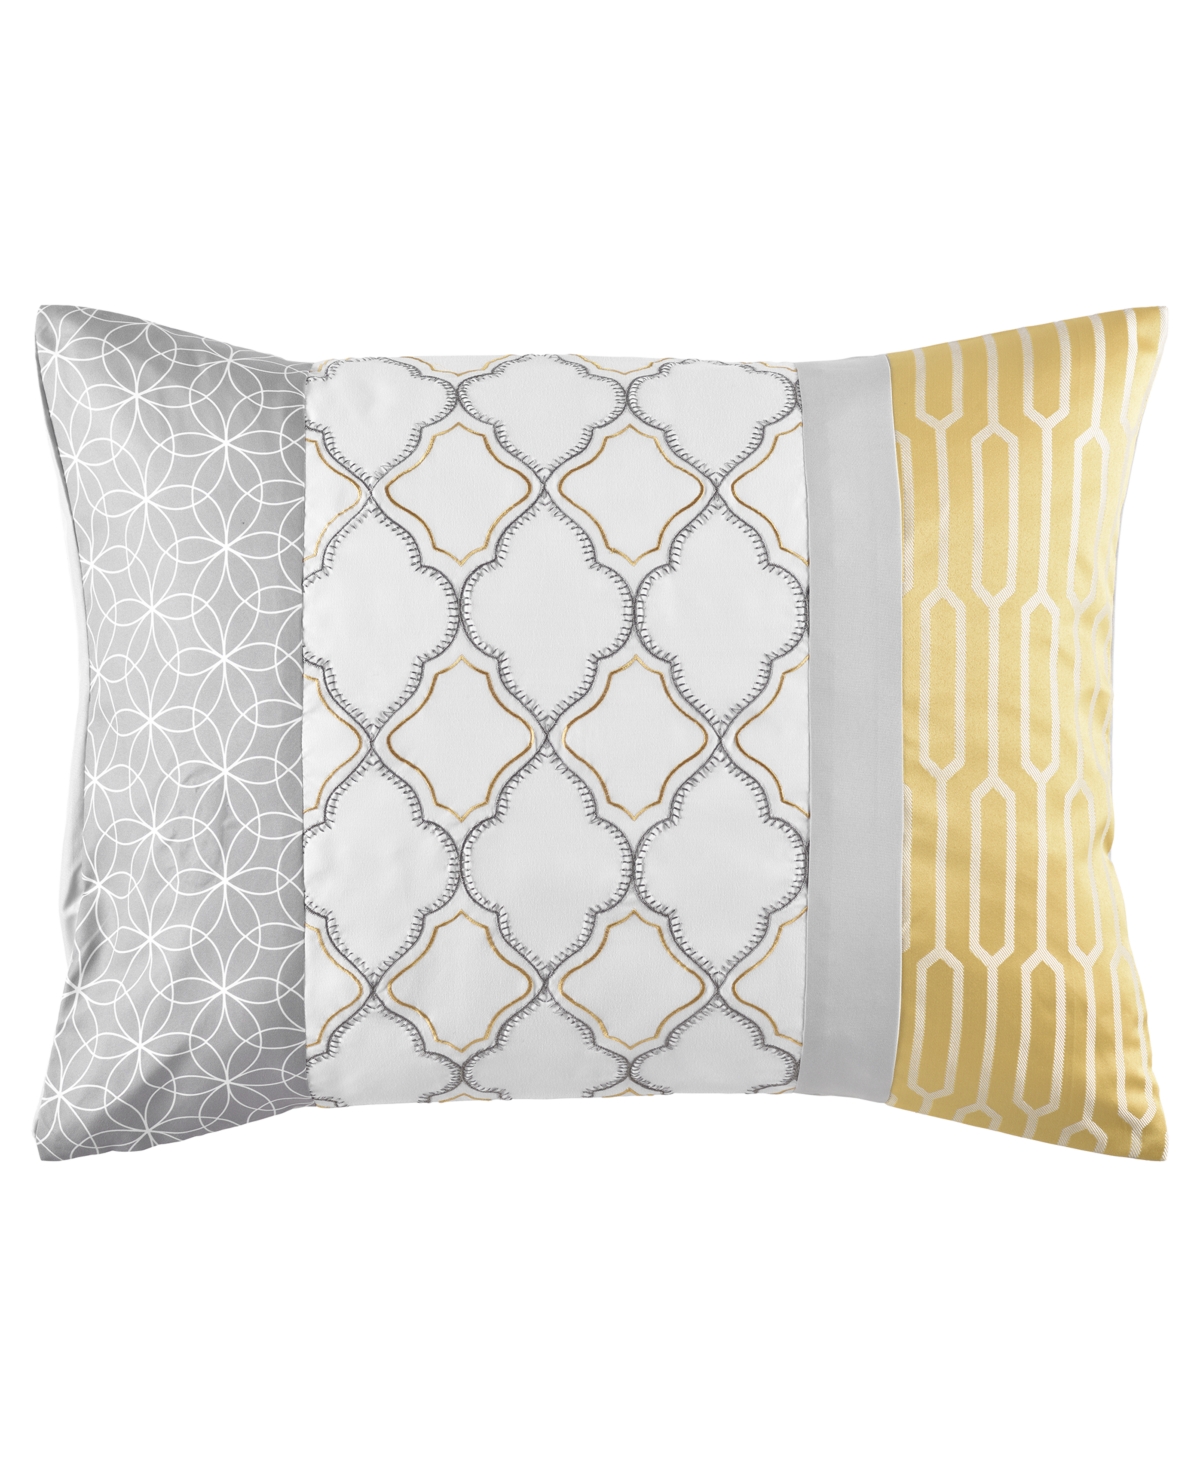 Shop Sunham Ridgewood Queen Comforter Set, 10 Piece In Gray,gold-tone